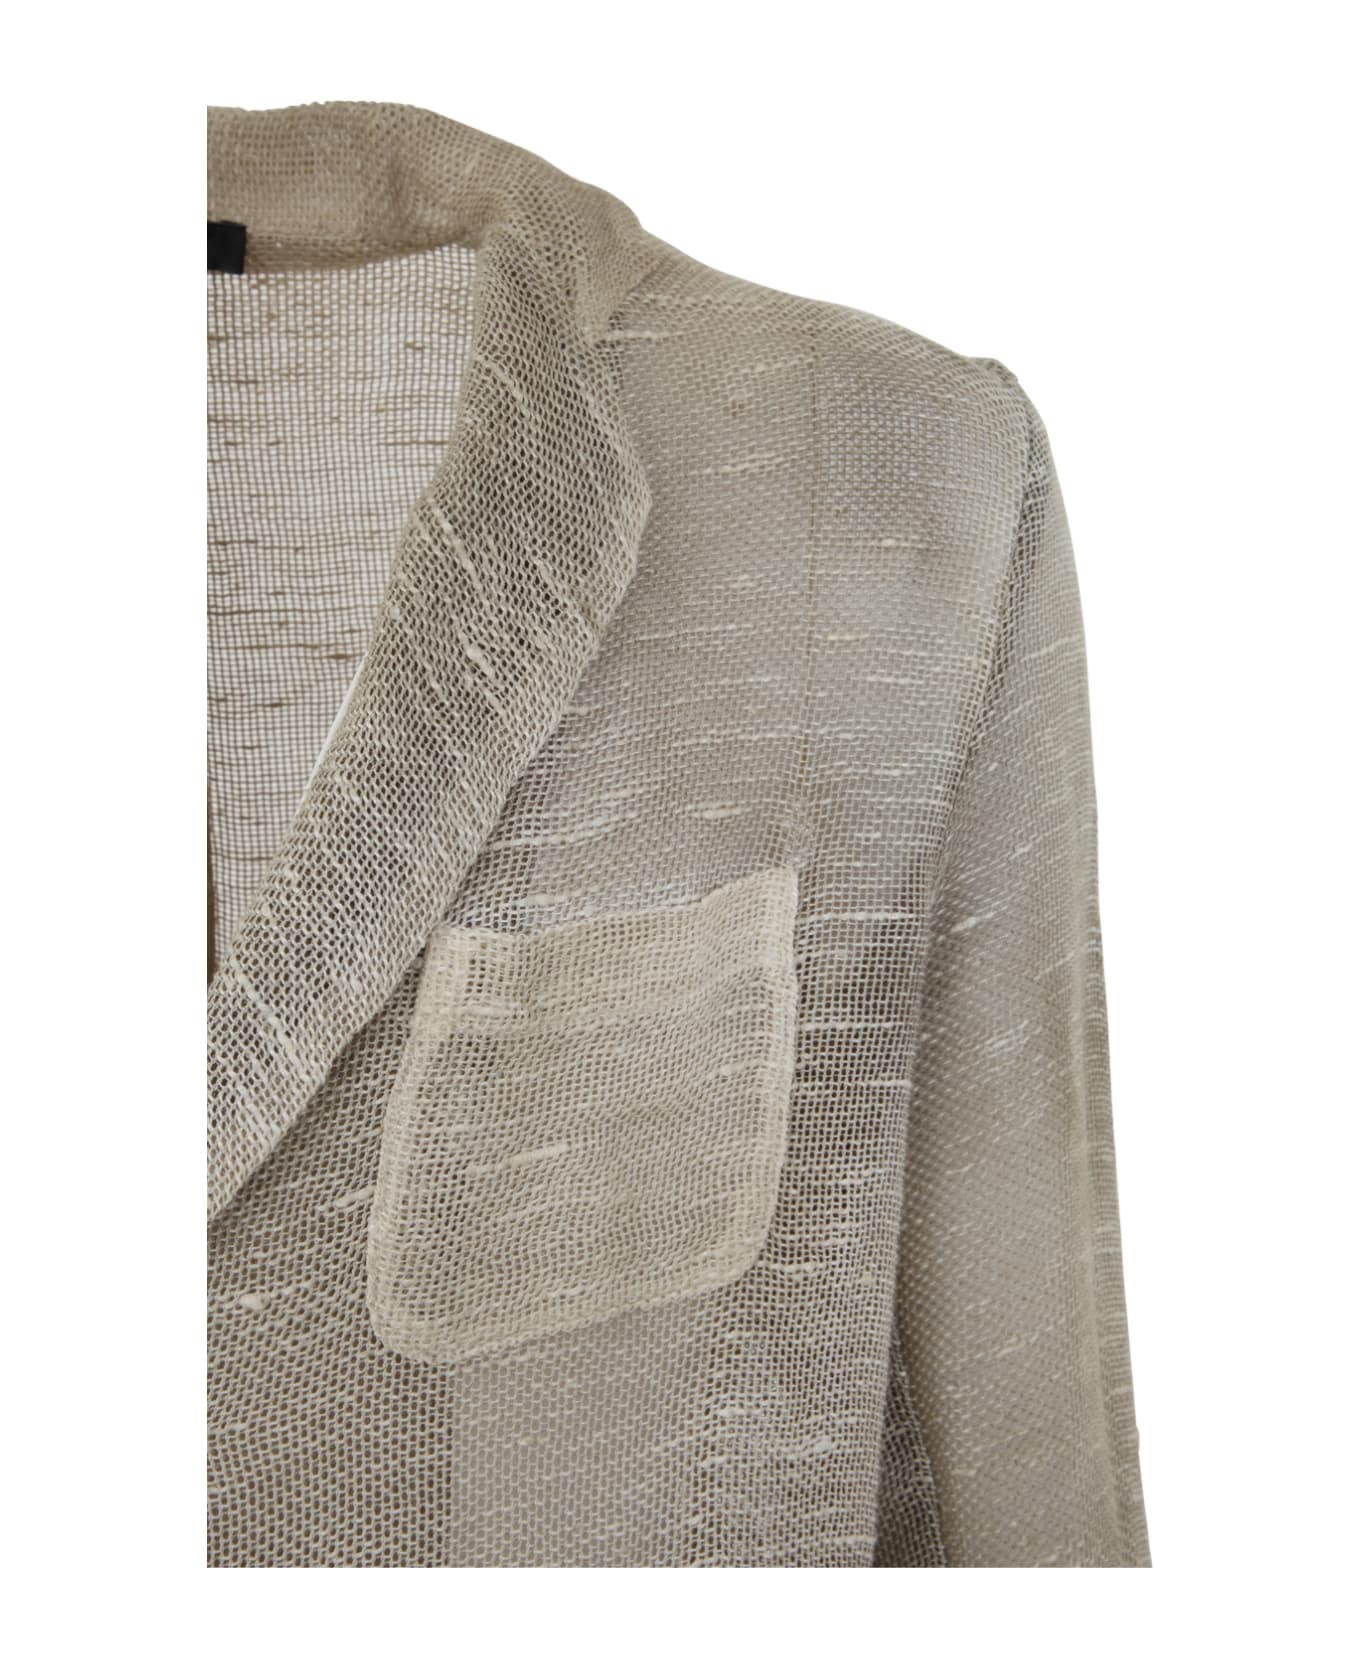 Avant Toi Black Camouflage Net Fabric Jacket - Zenzero